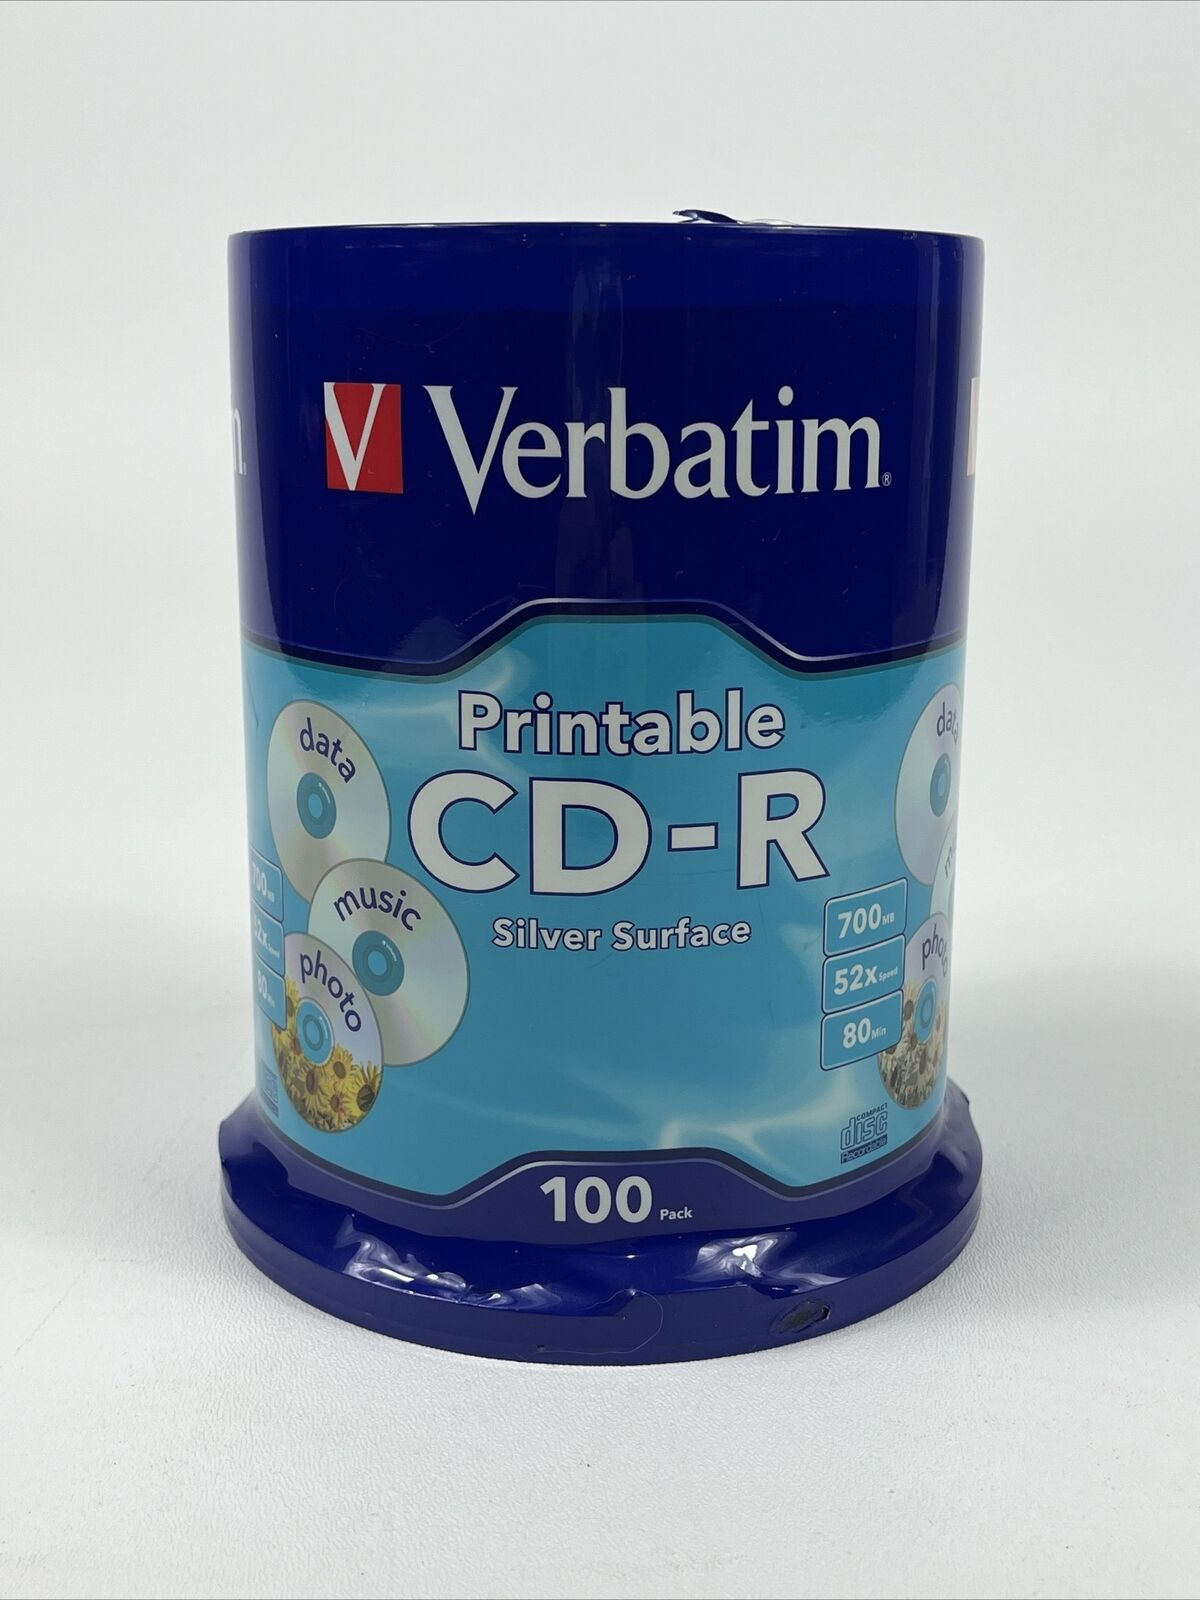 Sealed Verbatim Printable CD-r 100 Pack 700mb 52x 80min model #96574 - NEW